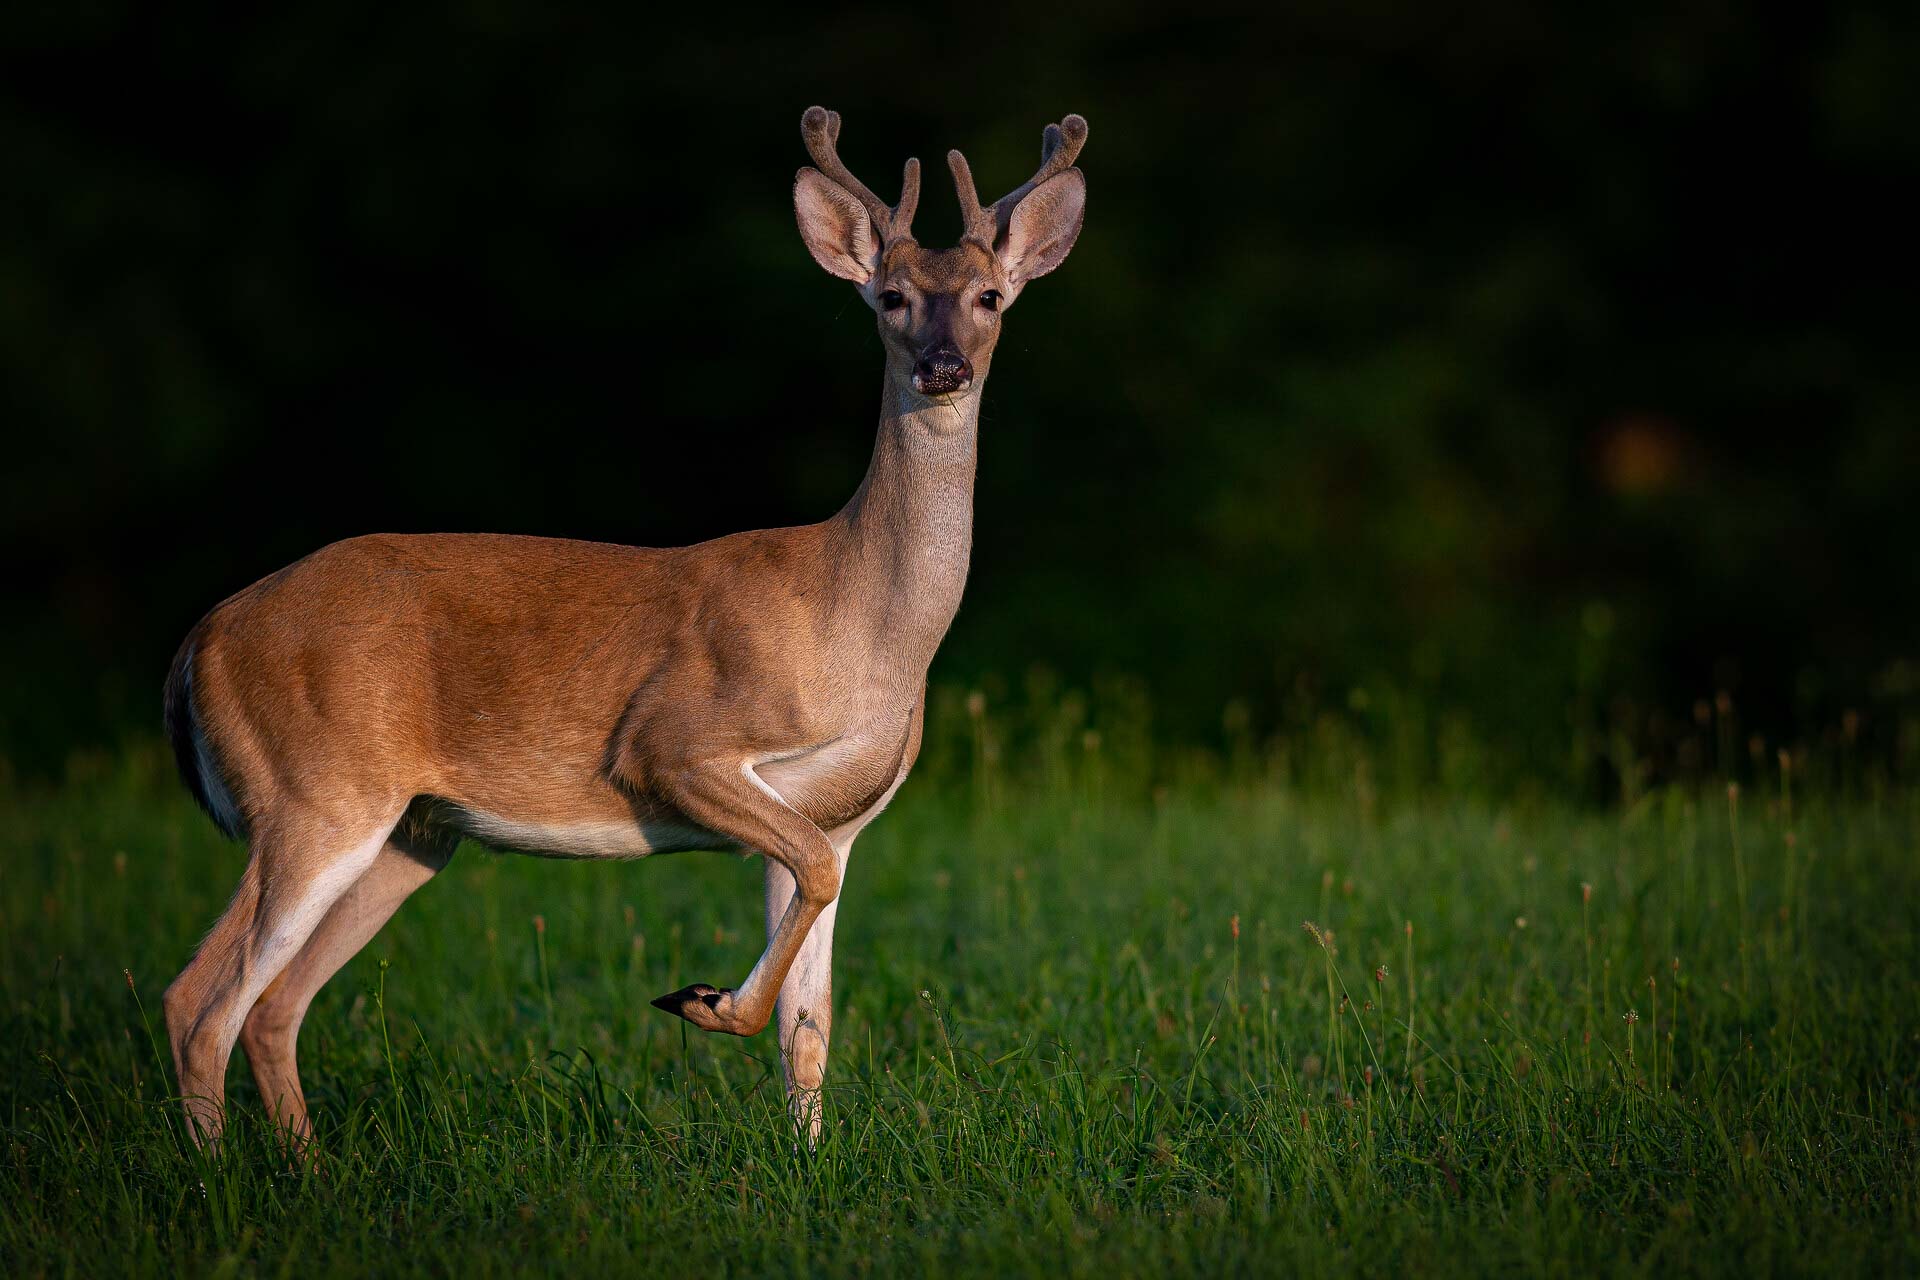 A young deer in velvet standing in a field